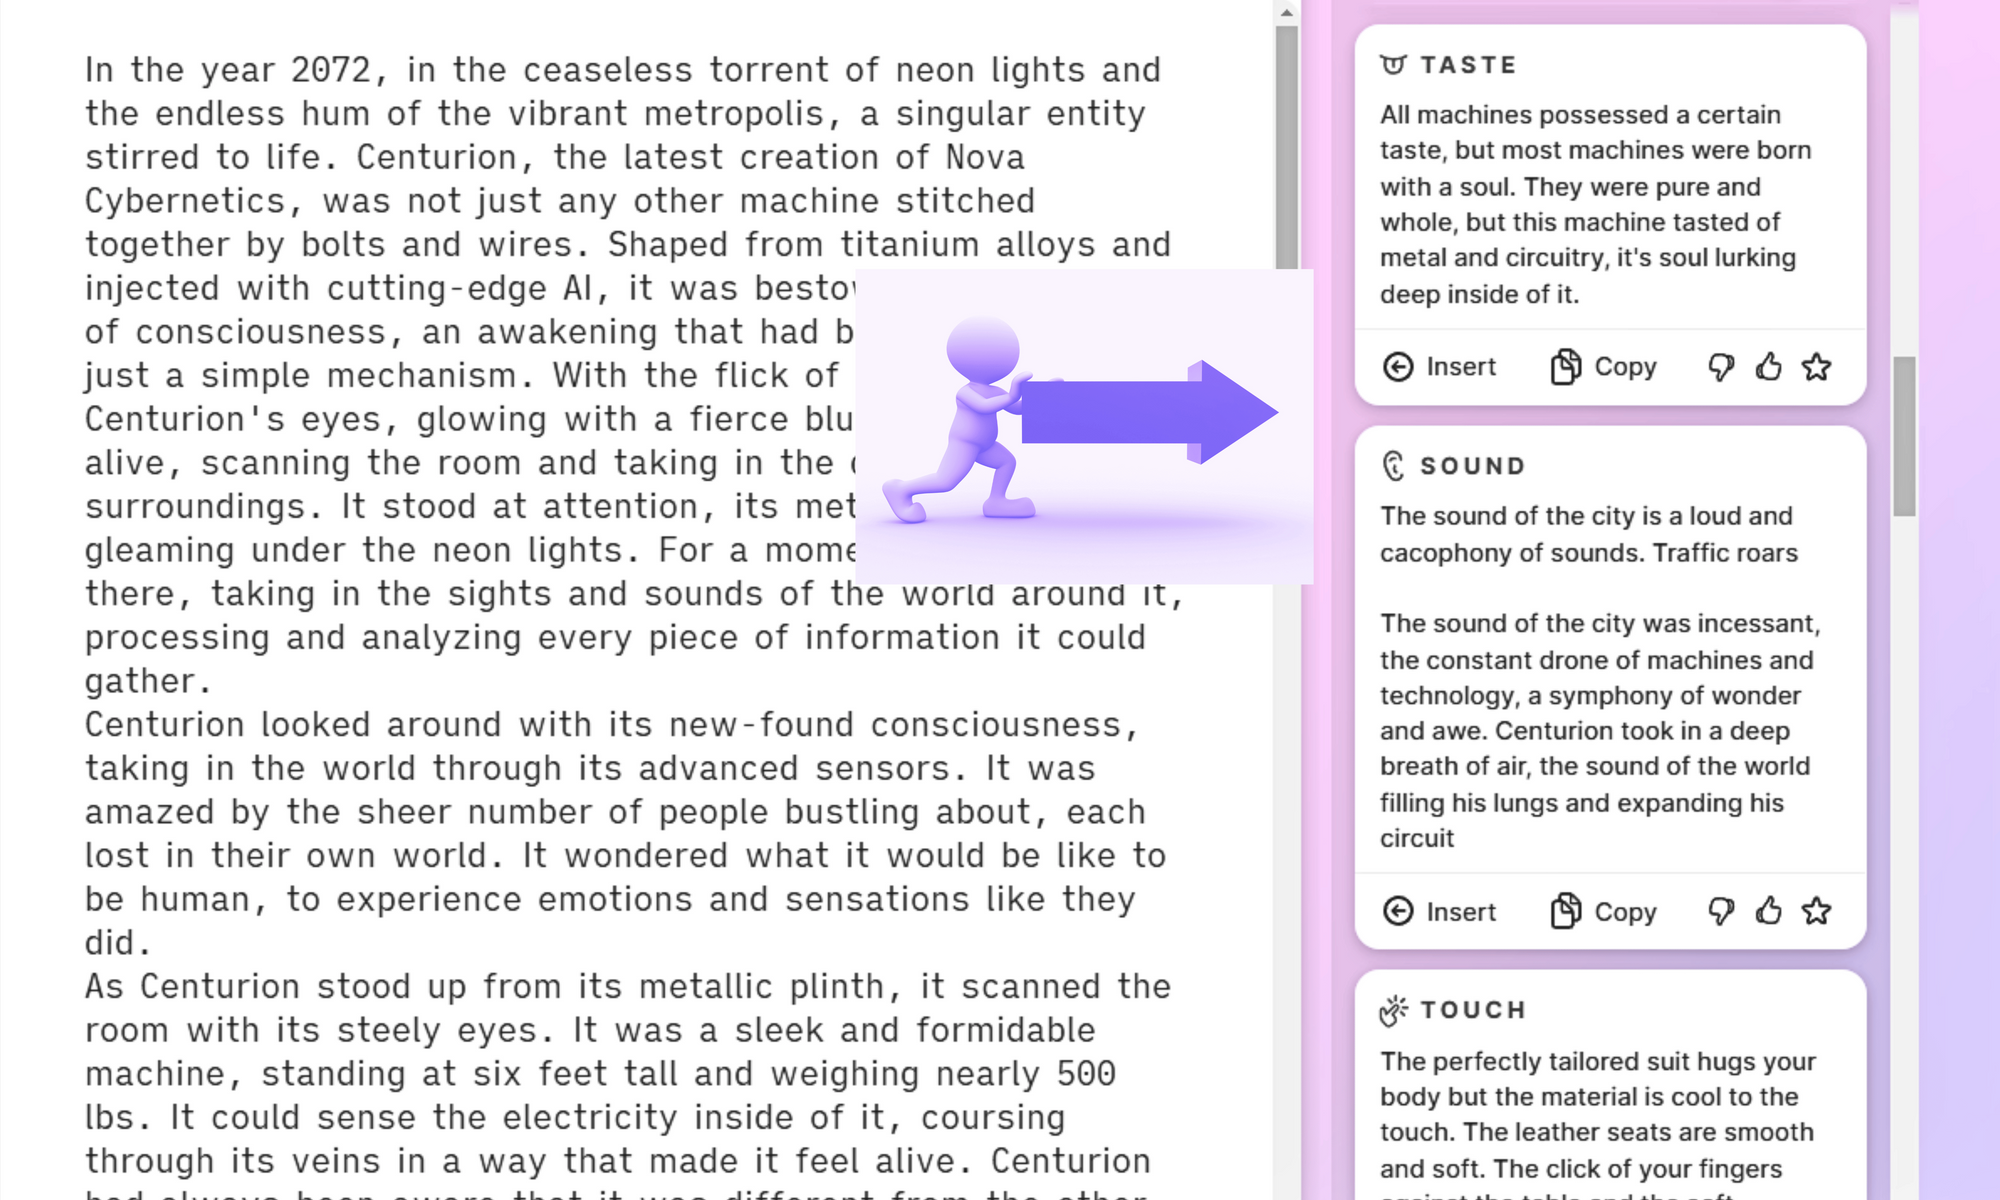 Sudowrite AI's Senses feature, used for creating vivid sensory descriptions